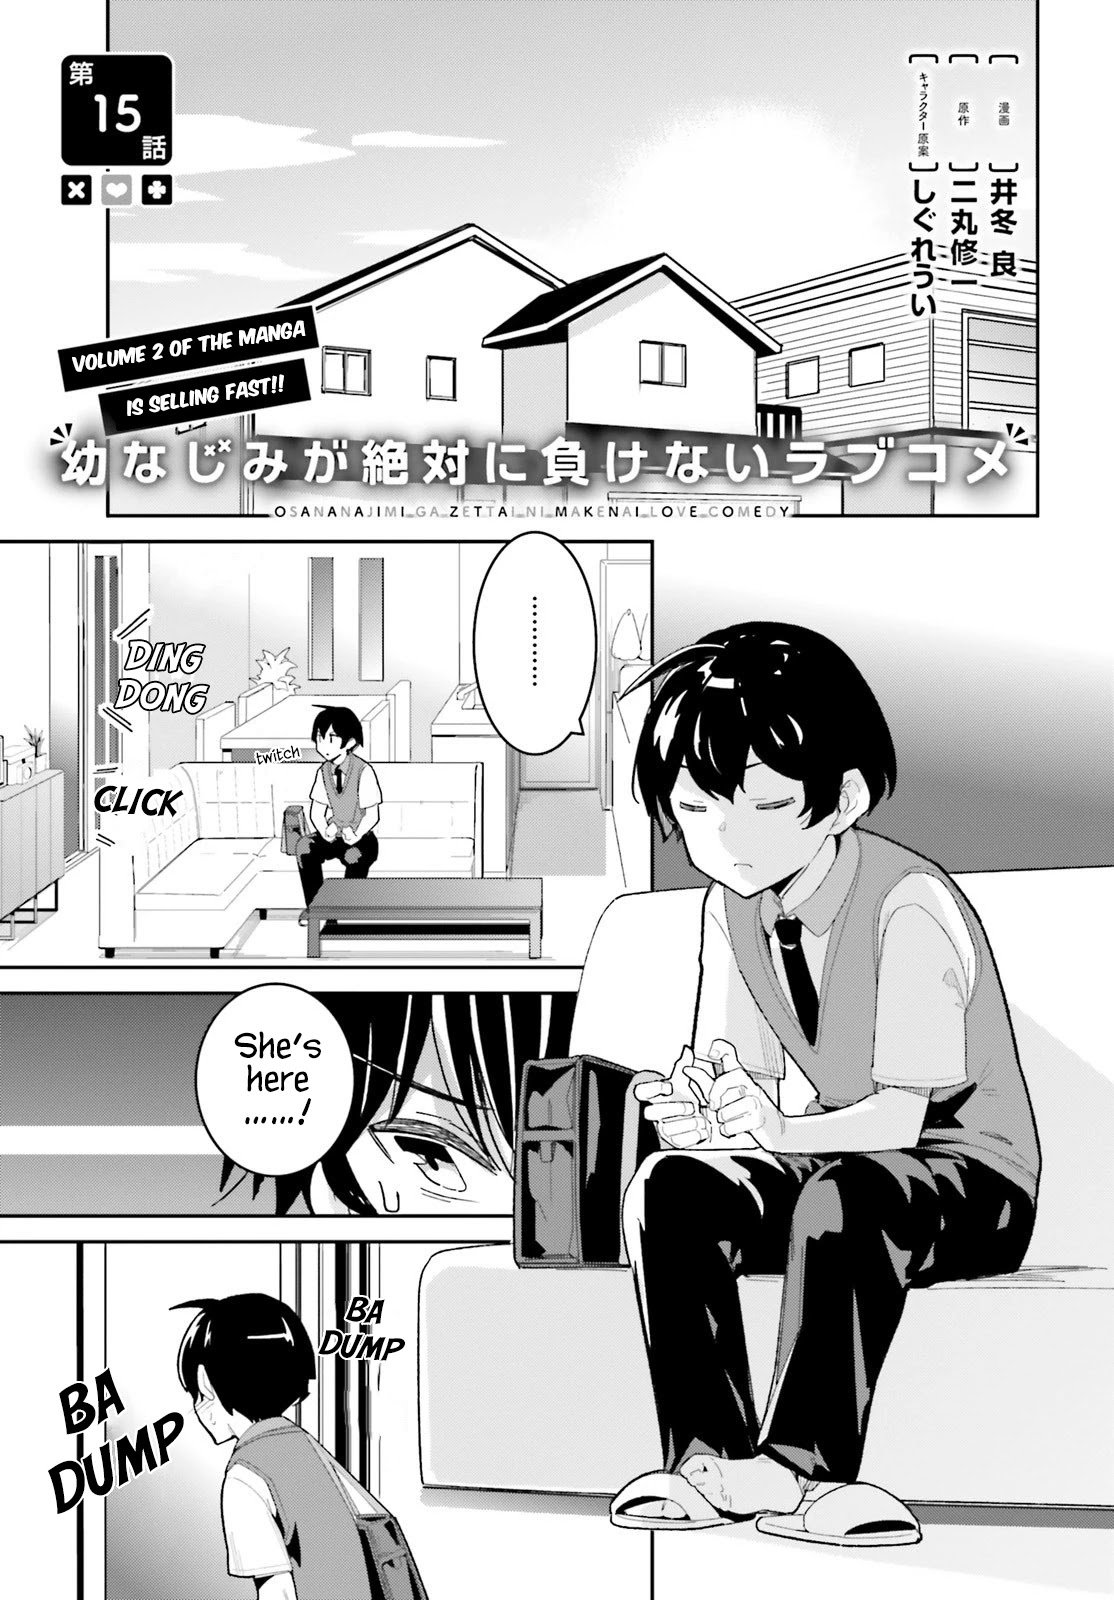 Read Osananajimi ga Zettai ni Makenai Love Comedy Manga English [New  Chapters] Online Free - MangaClash